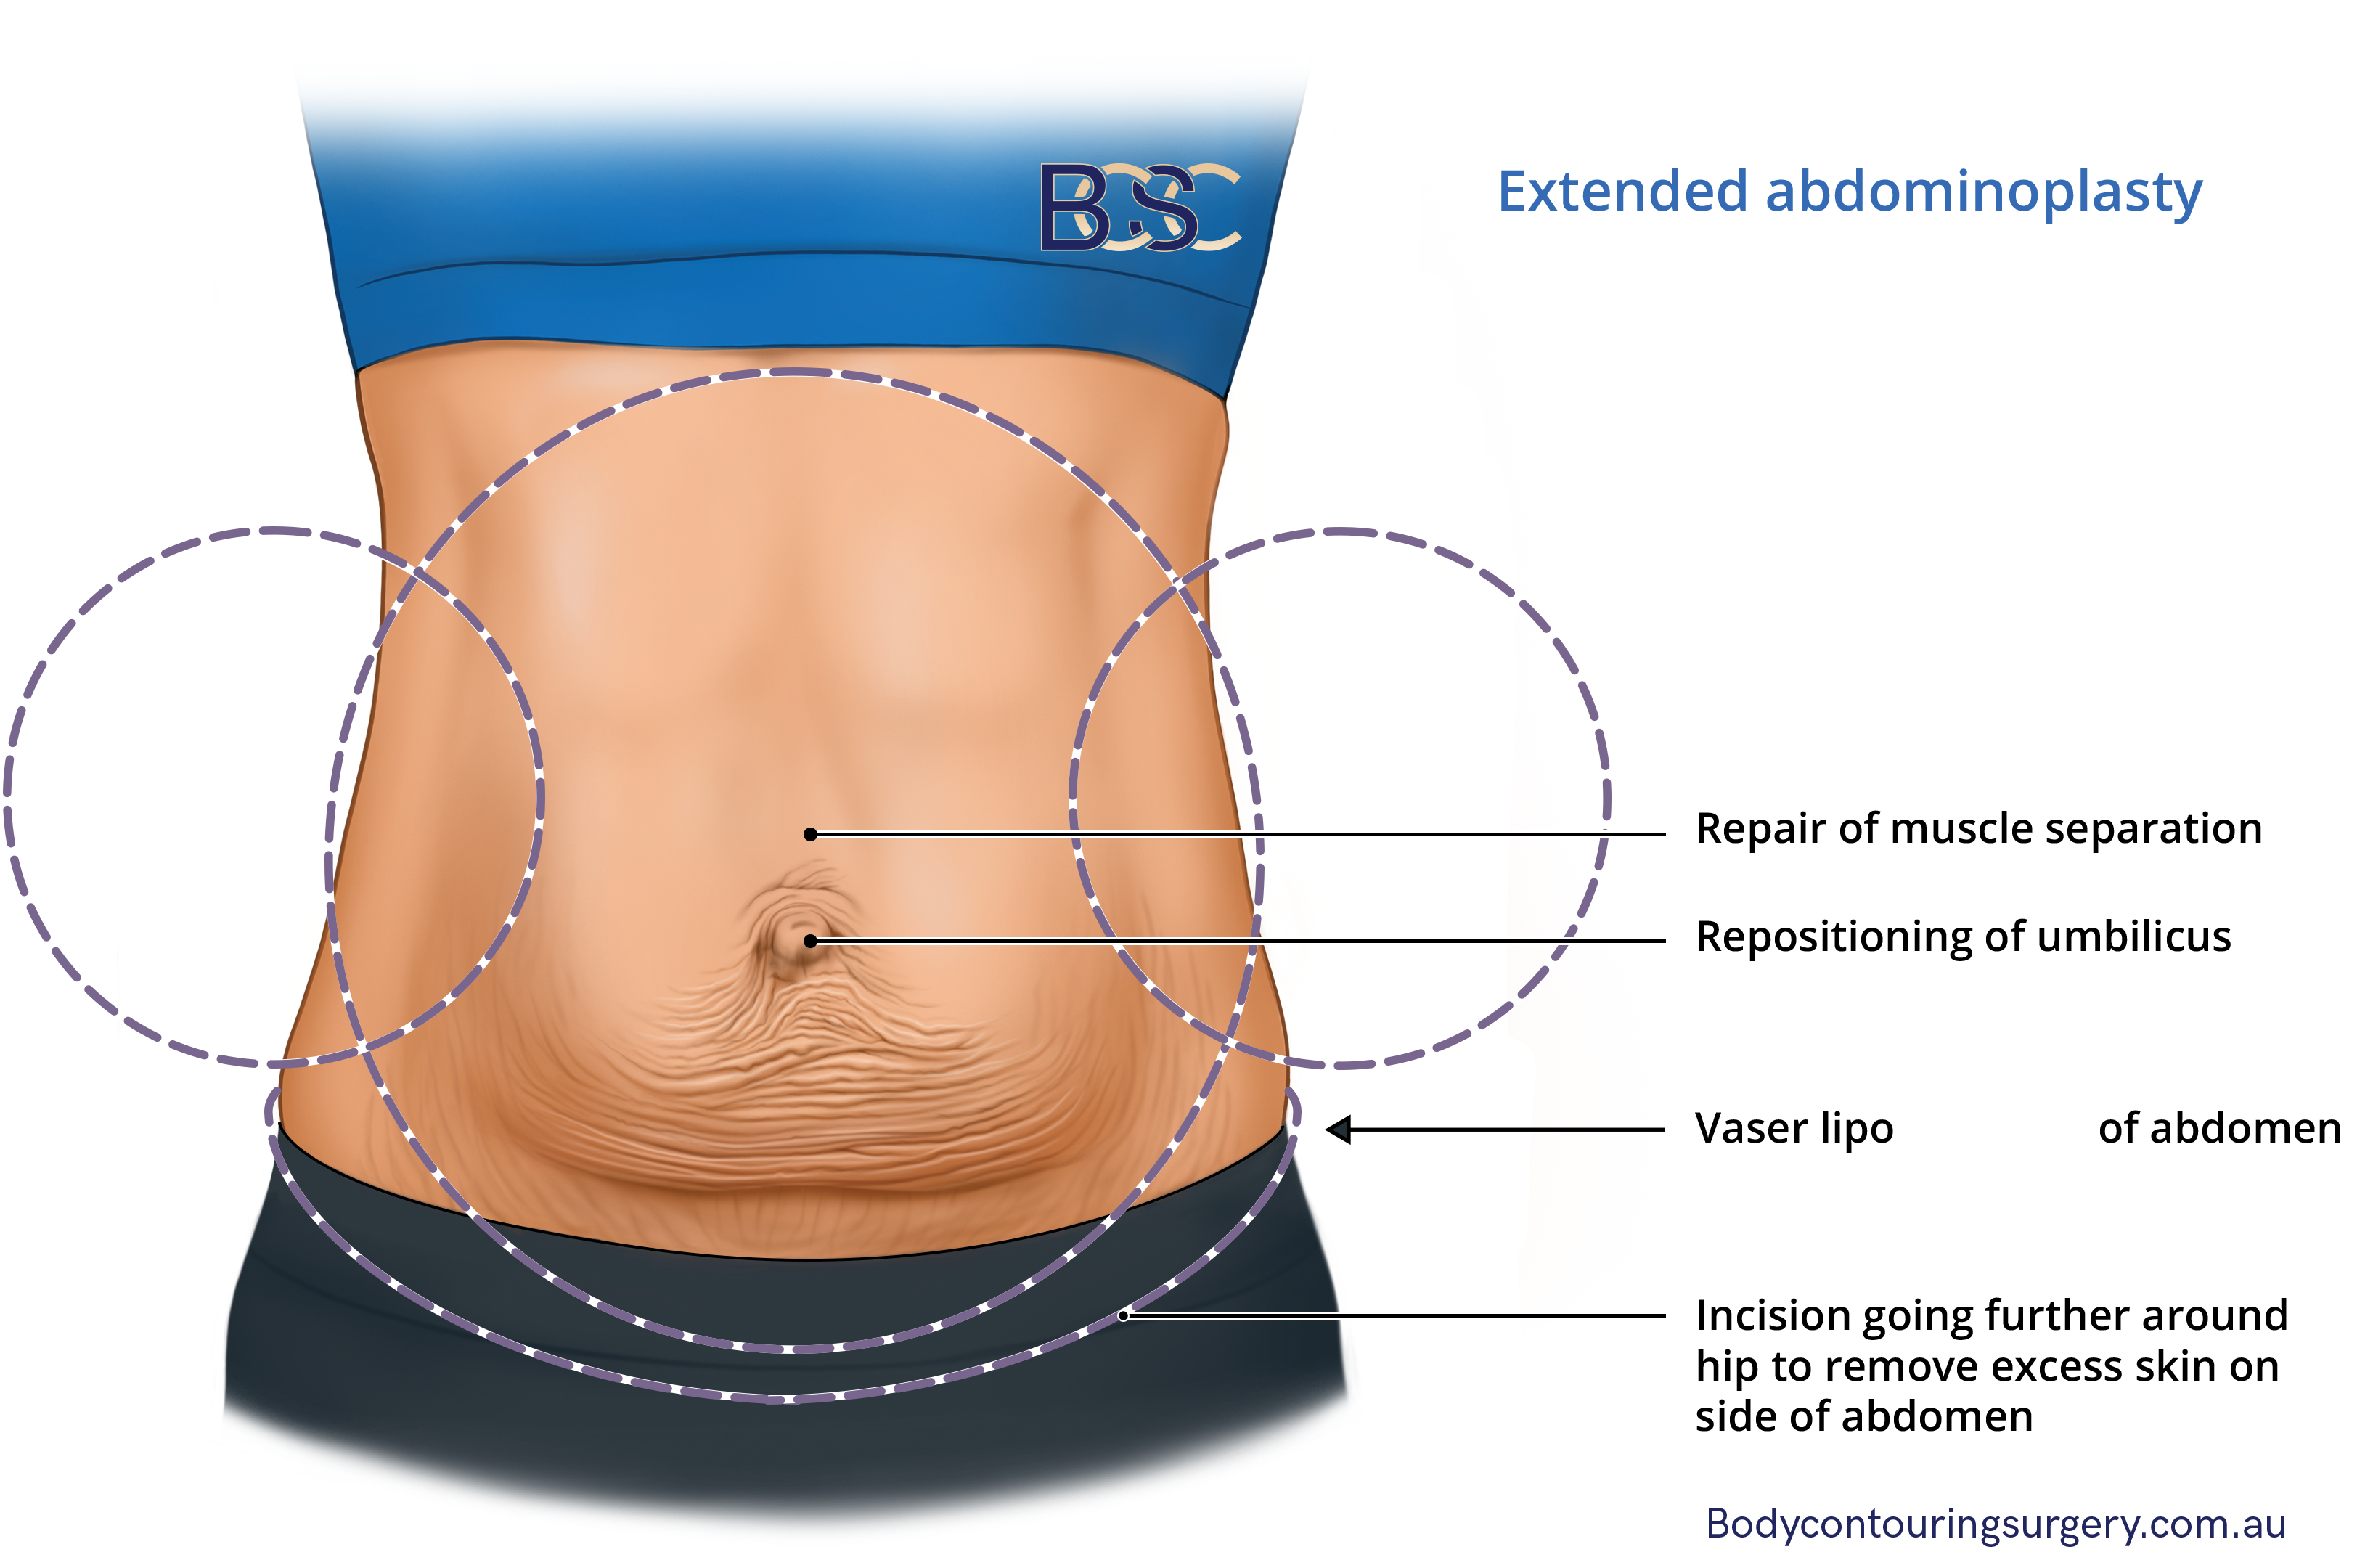 Extended abdominoplasty